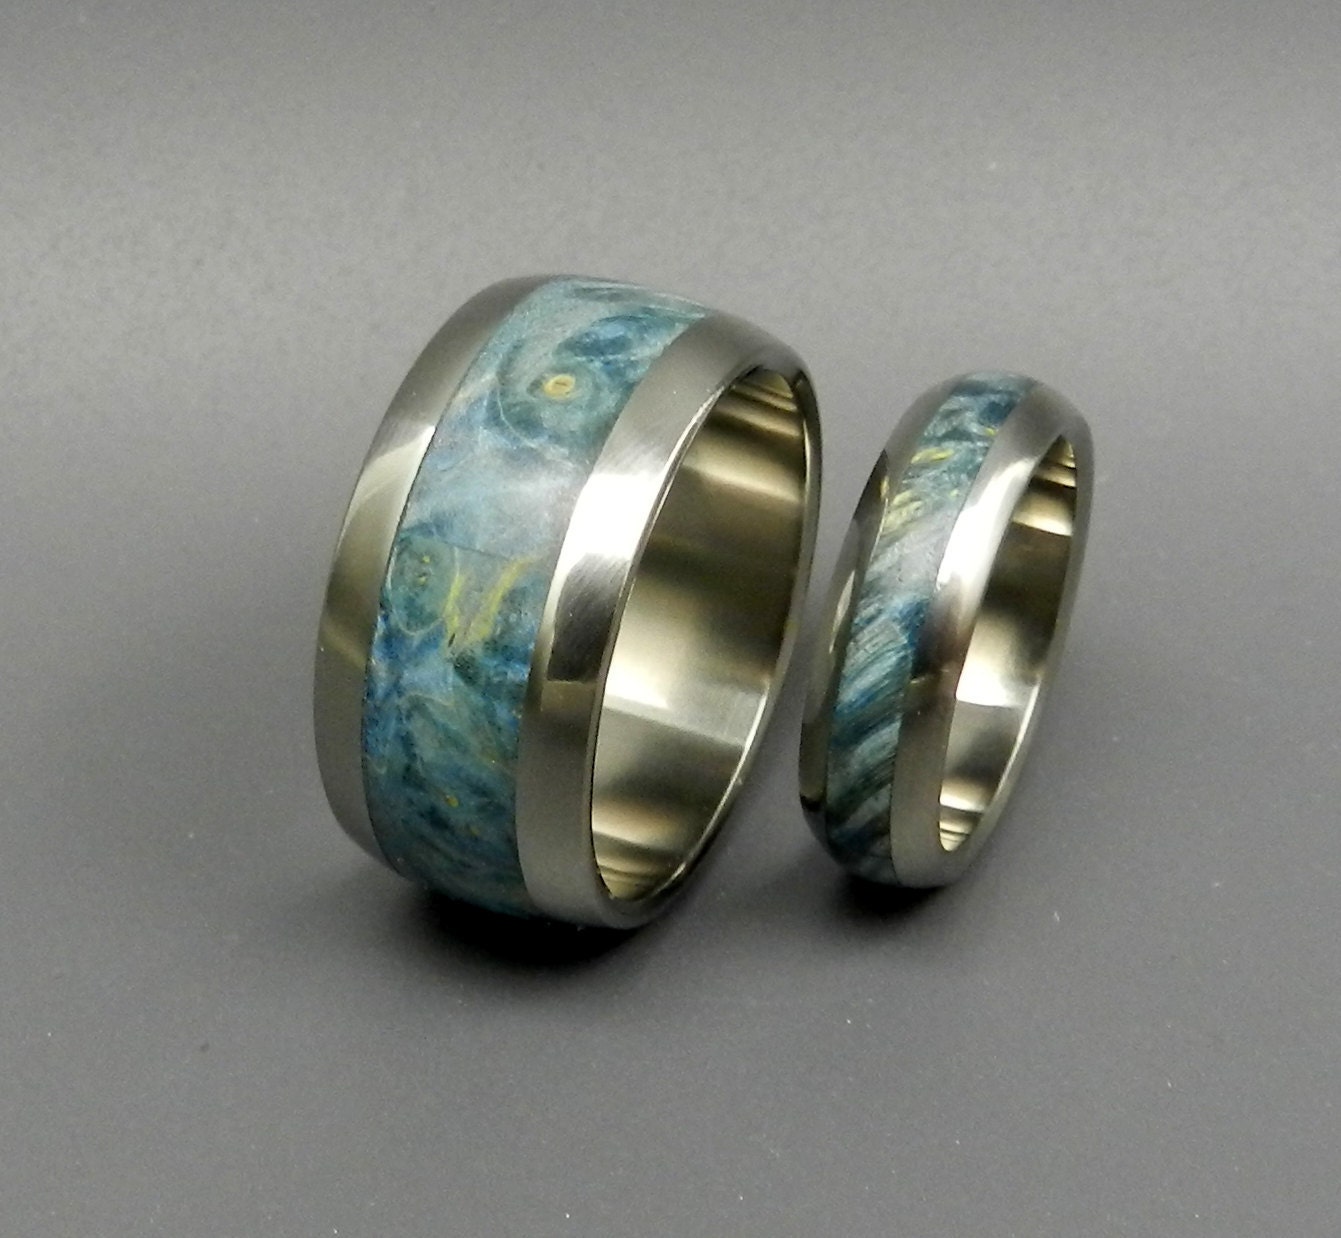 Damascus wedding ring sets